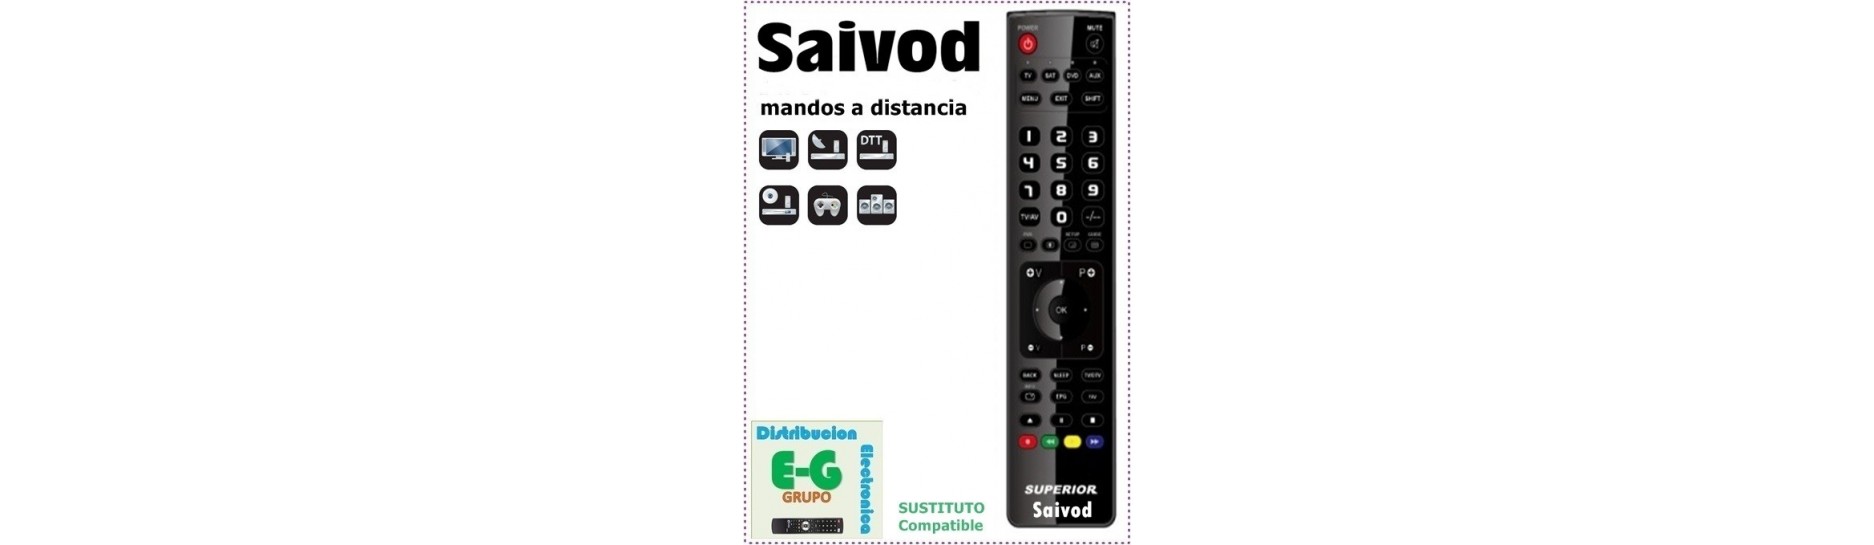 Mando para Televisión SAIVOD | Comprar Mando para Televisión SAIVOD